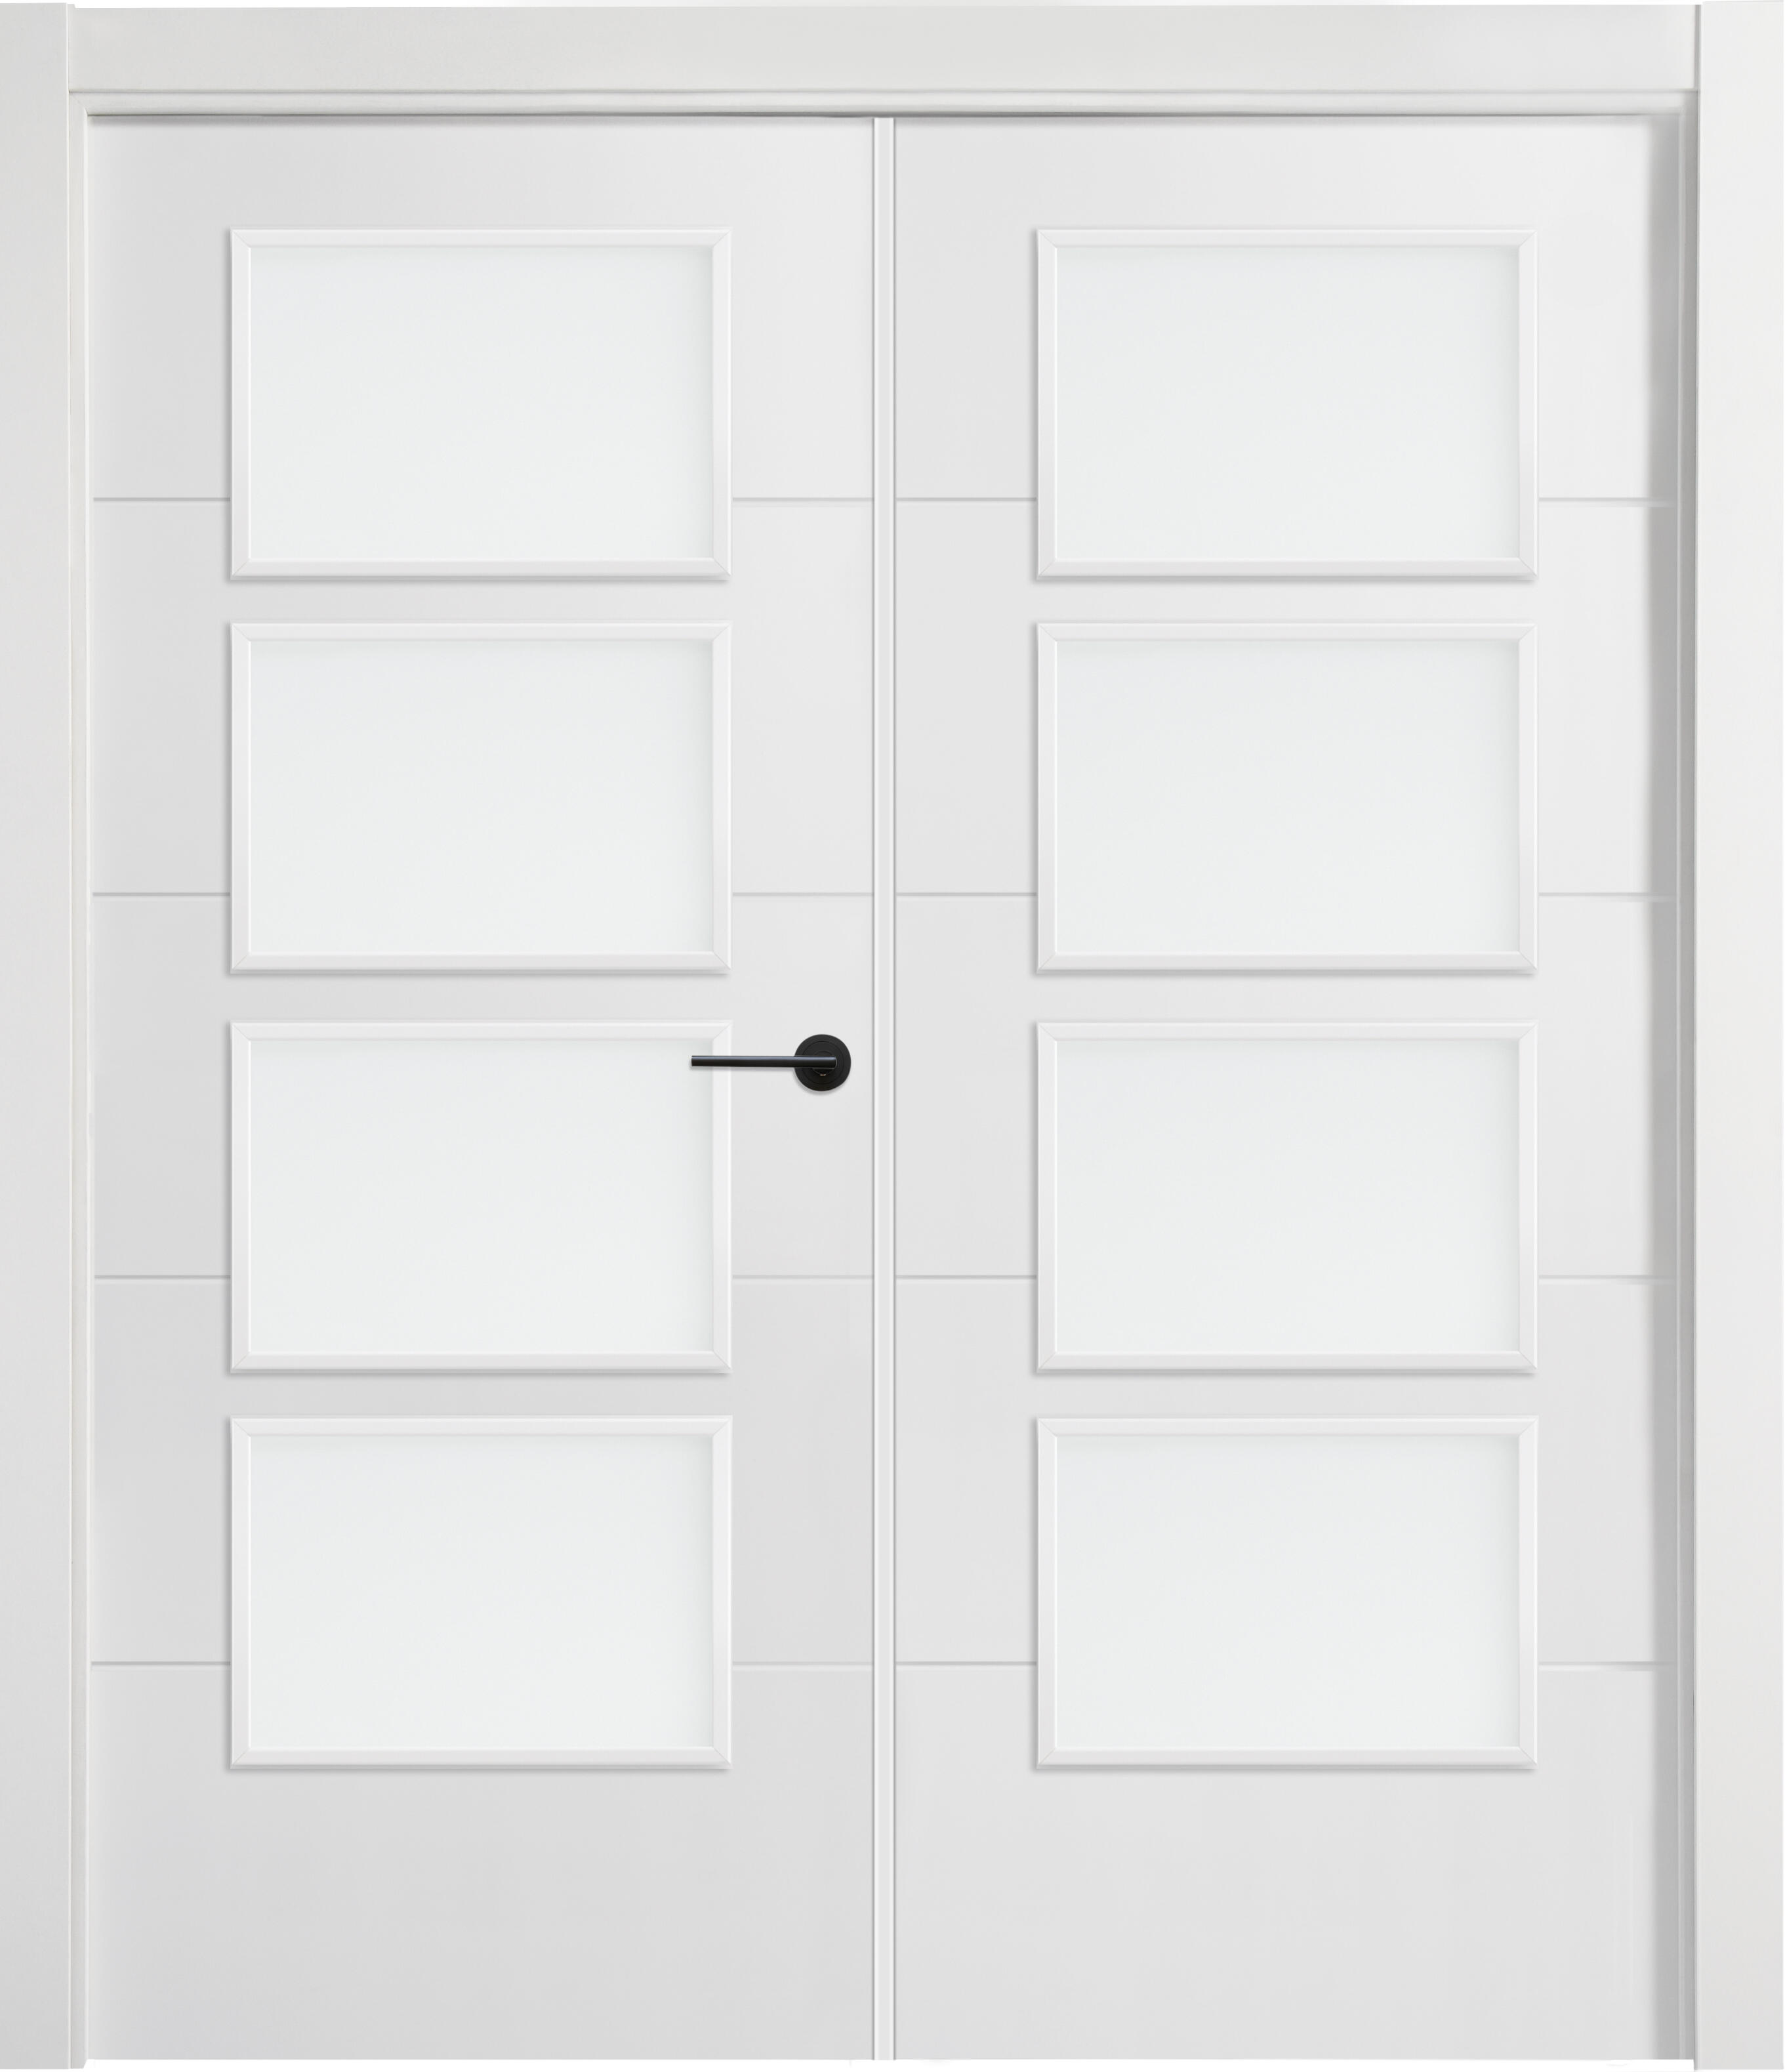 Puerta lucerna plus black blanco de apertura izquierda con cristal 125 cm